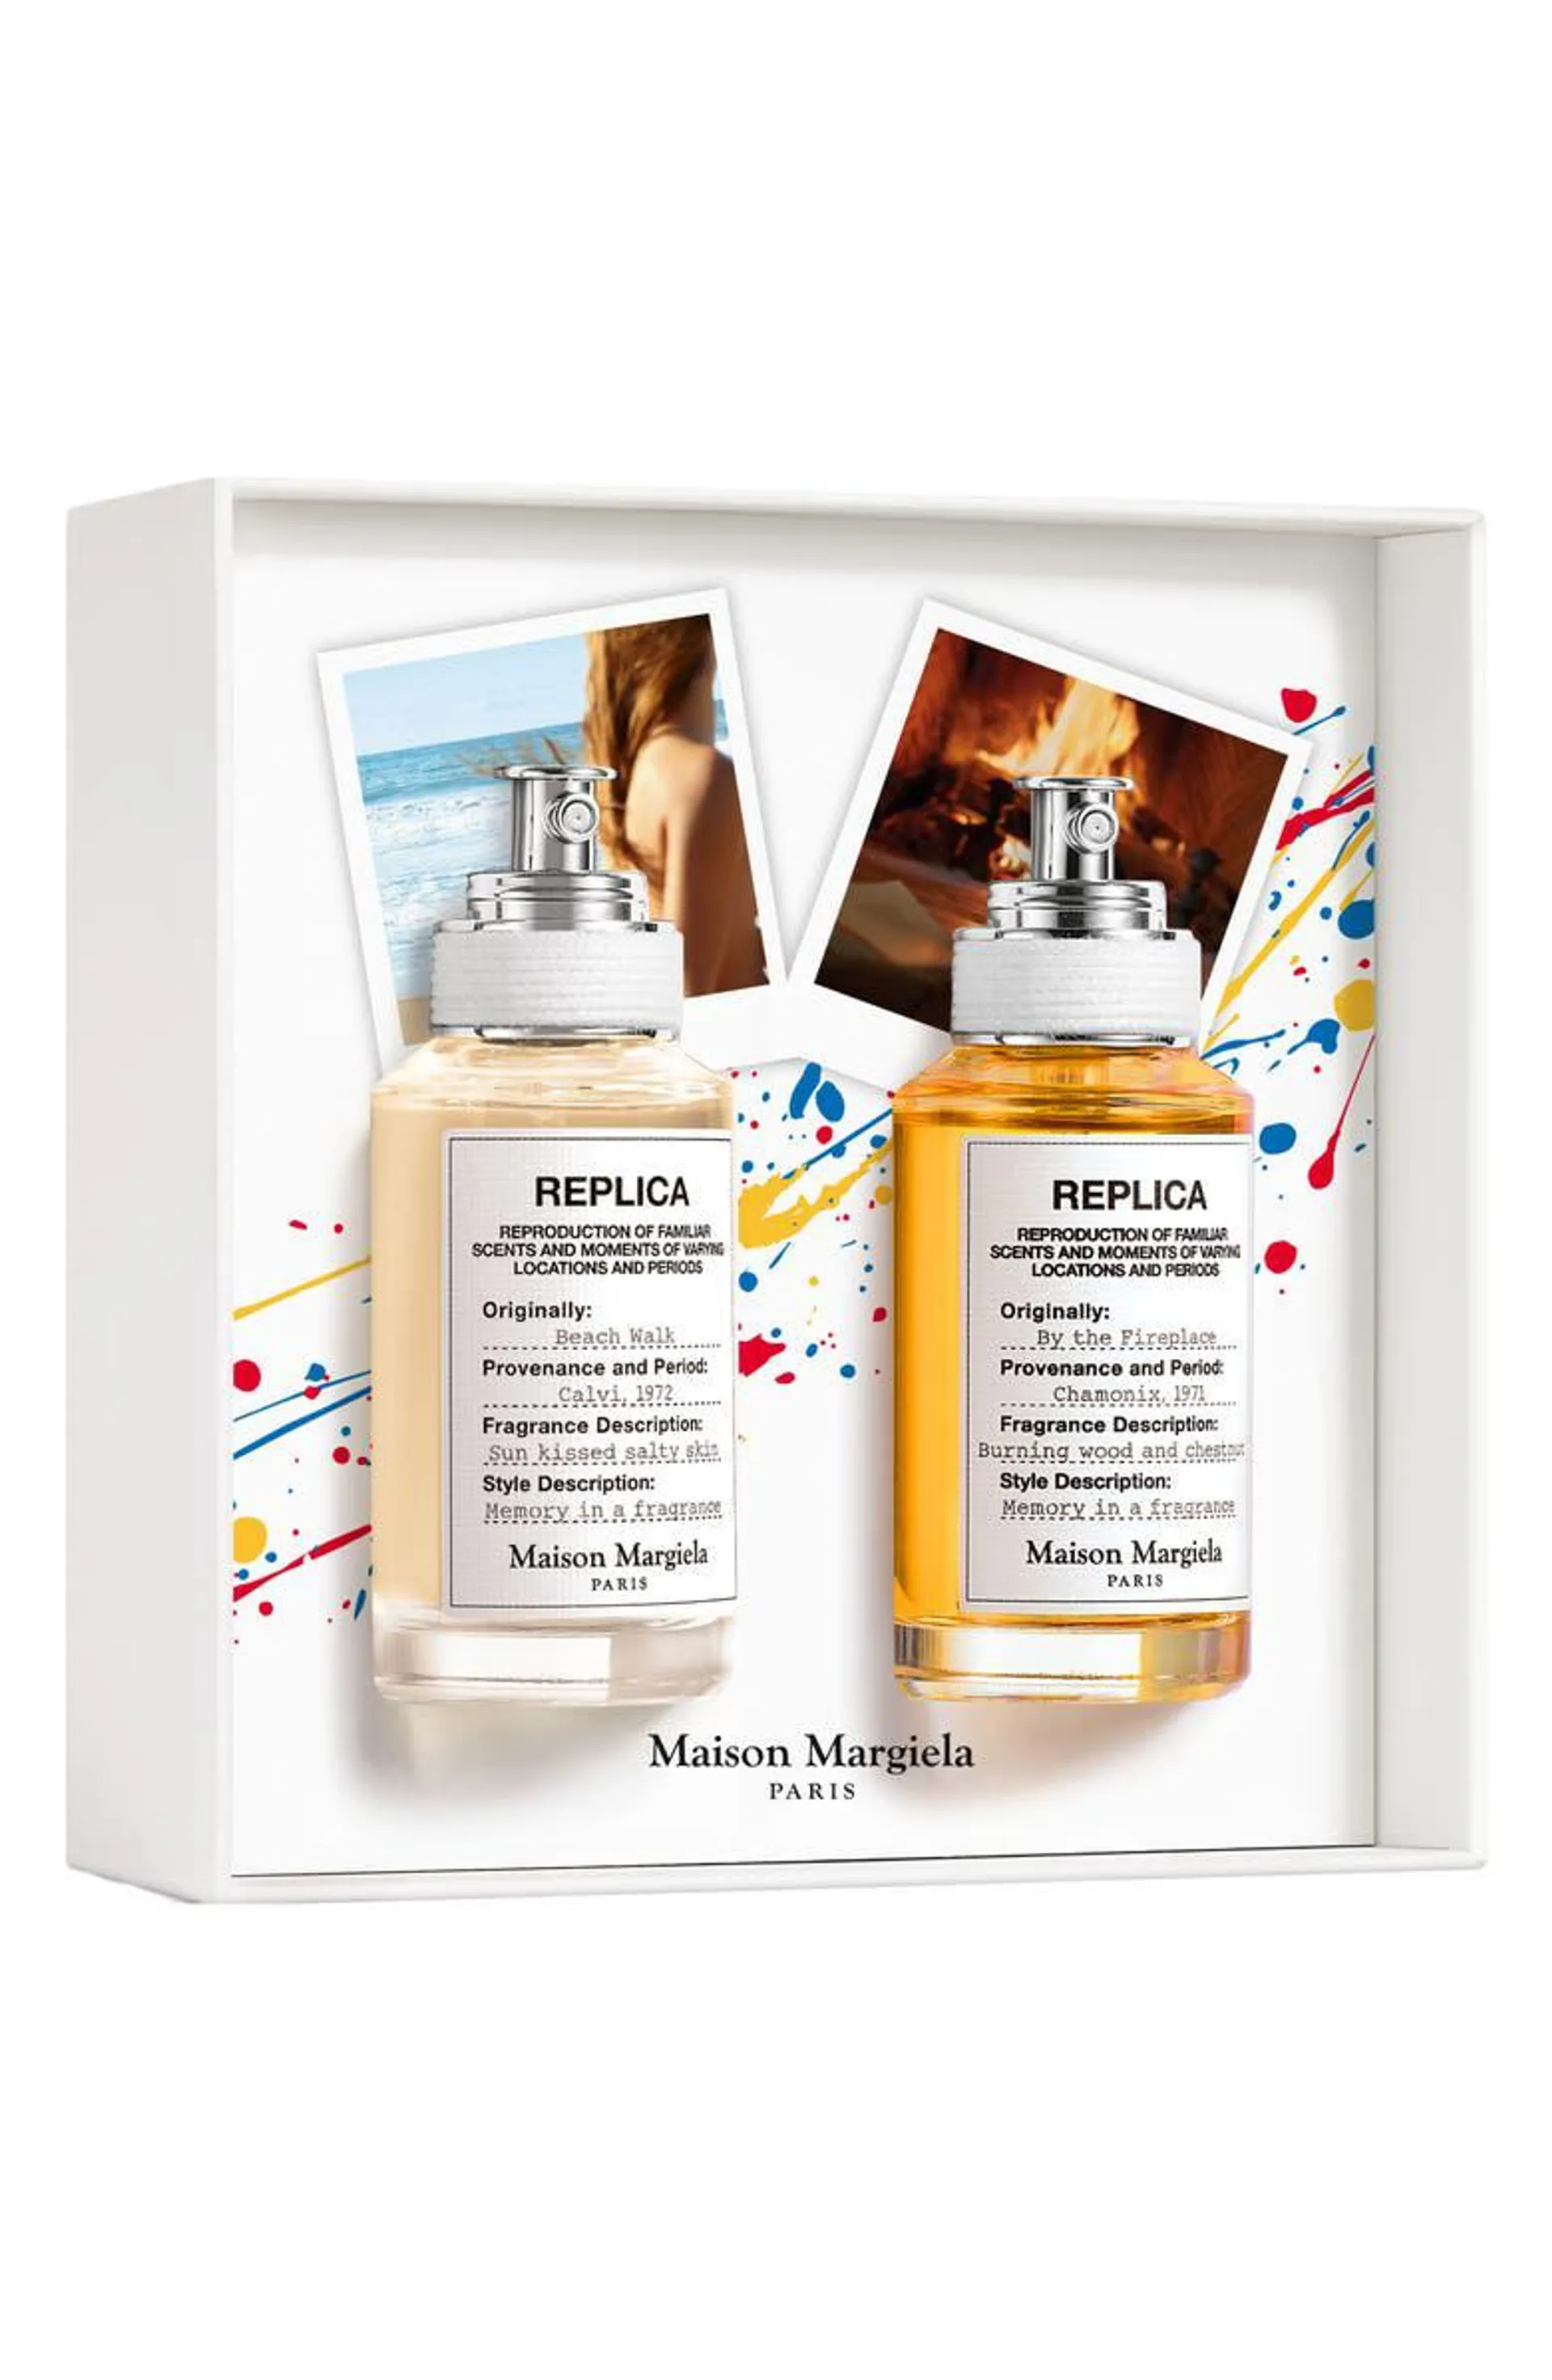 Replica Paint Drop Fragrance Set (Limited Edition) USD $152 Value